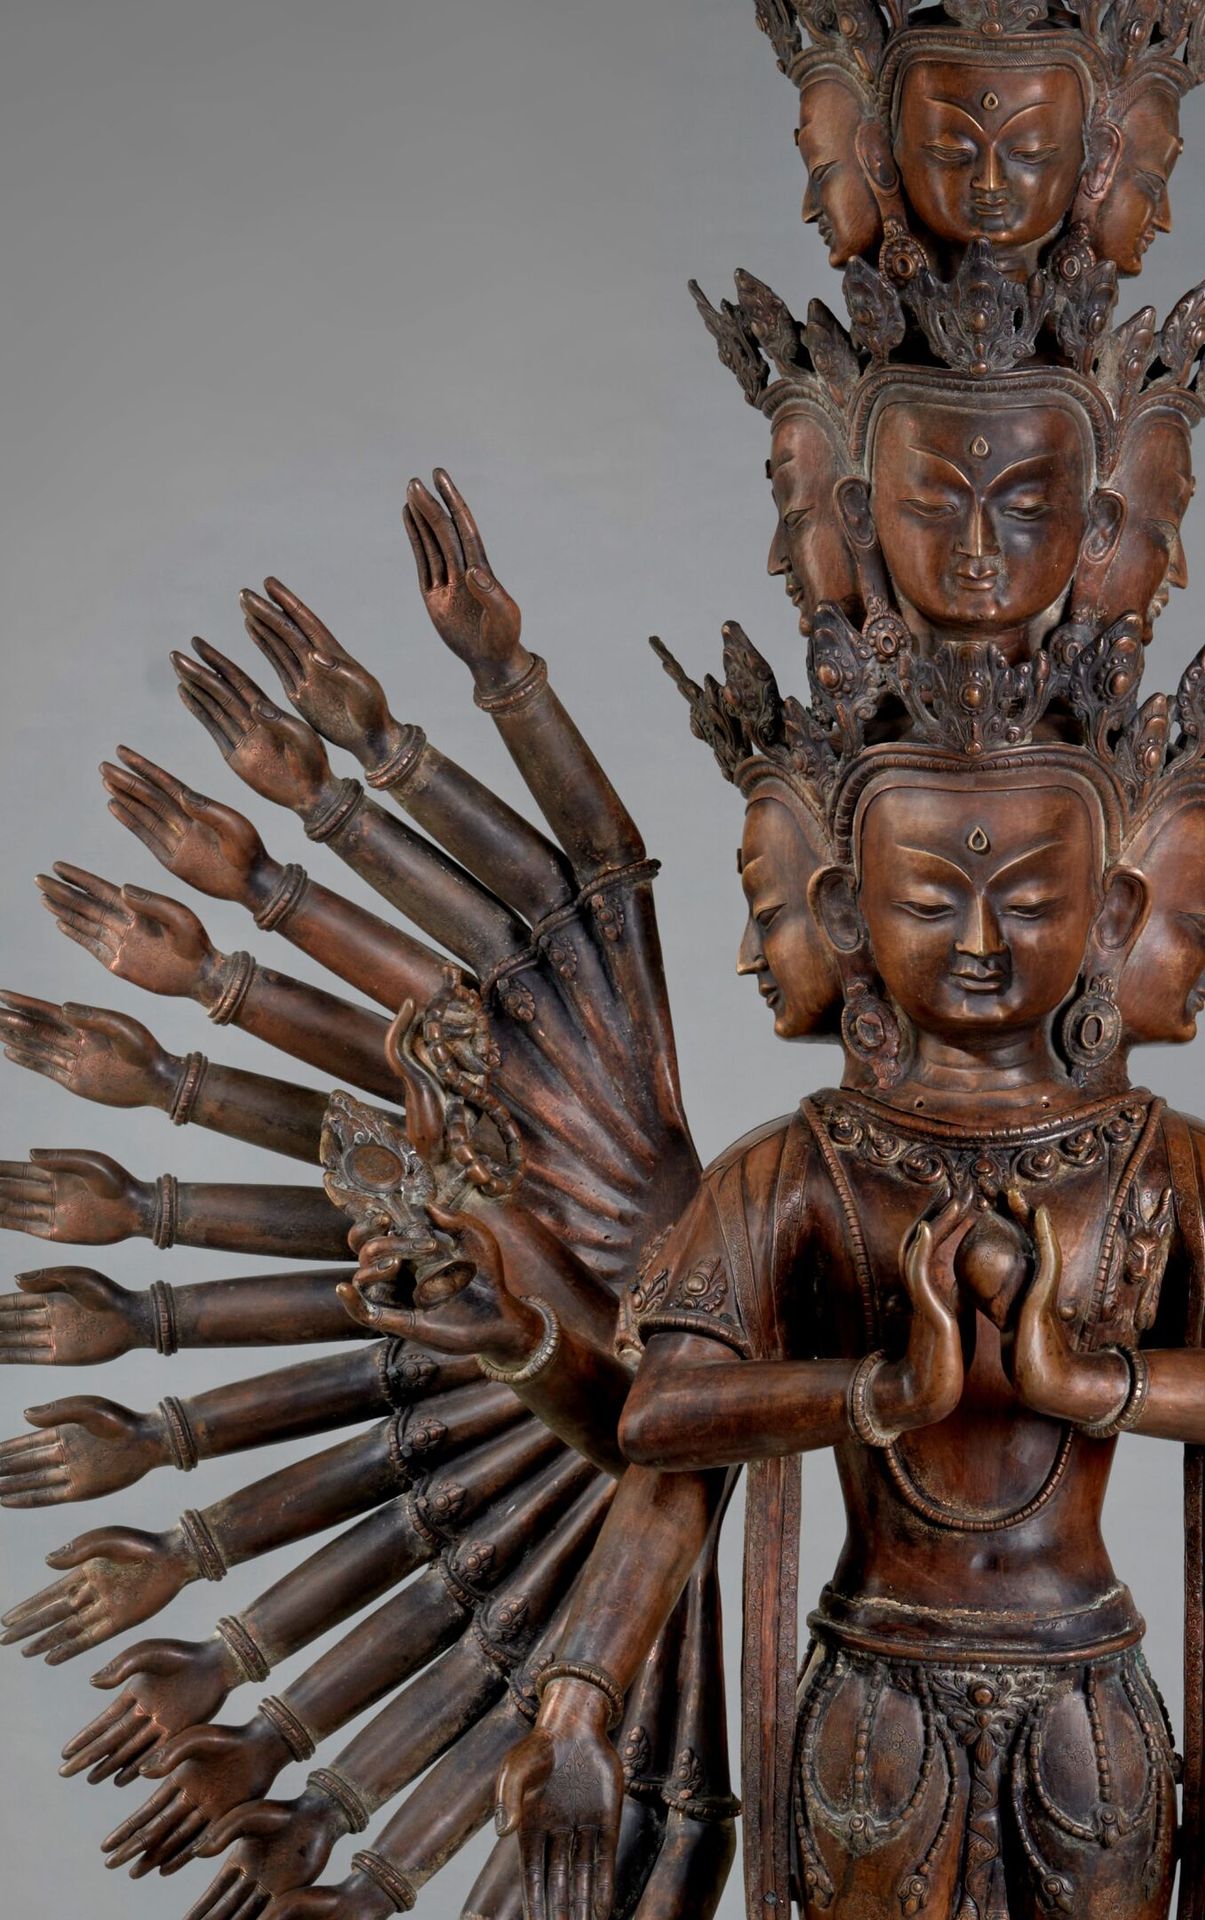 Null Nepal, finales del siglo XIX/principios del XX
Estatua de Avalokitesvara co&hellip;